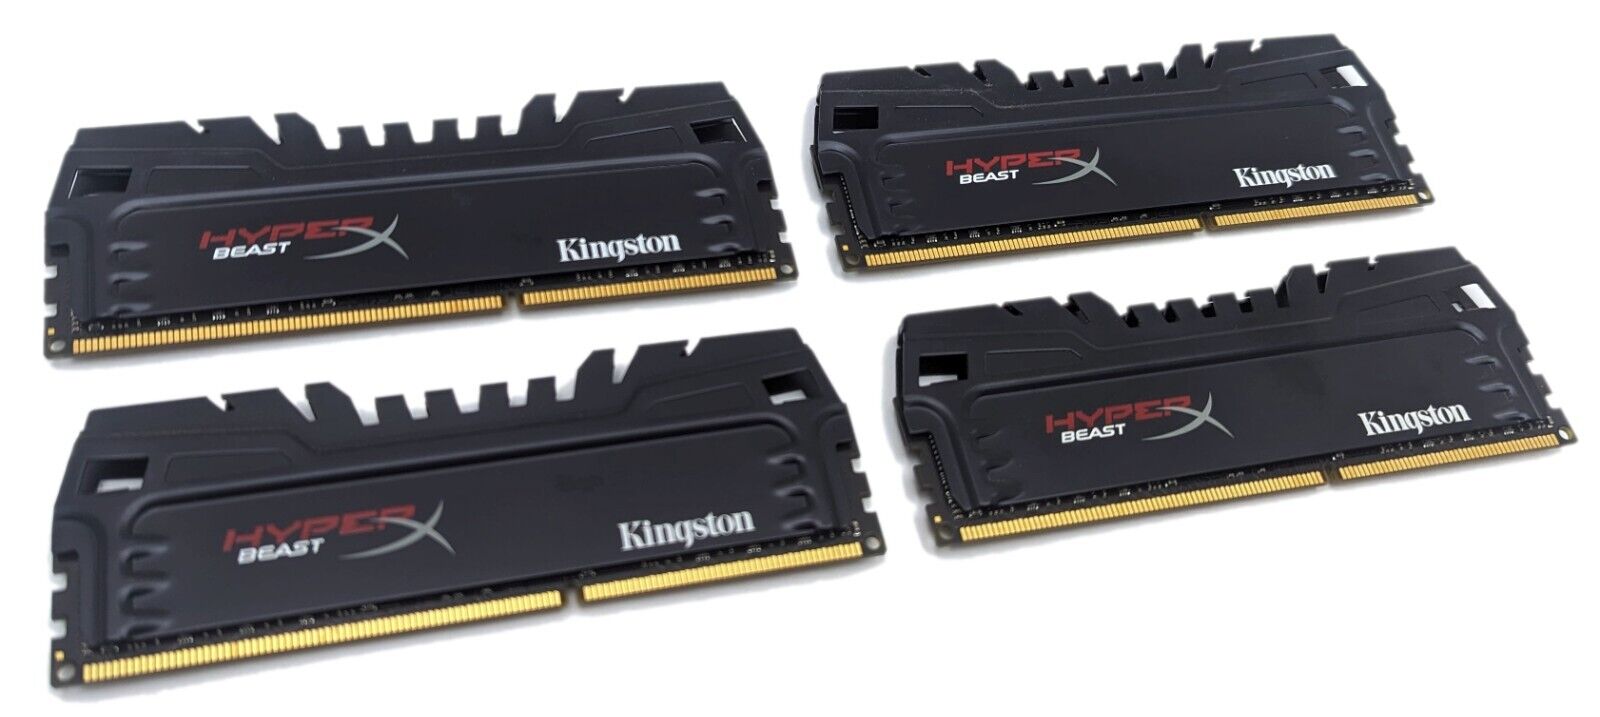 Kingston HyperX Beast 32GB Kit (4x8GB) 1.5V PC3-15000 DDR3 RAM KHX18C10AT3K4/32X